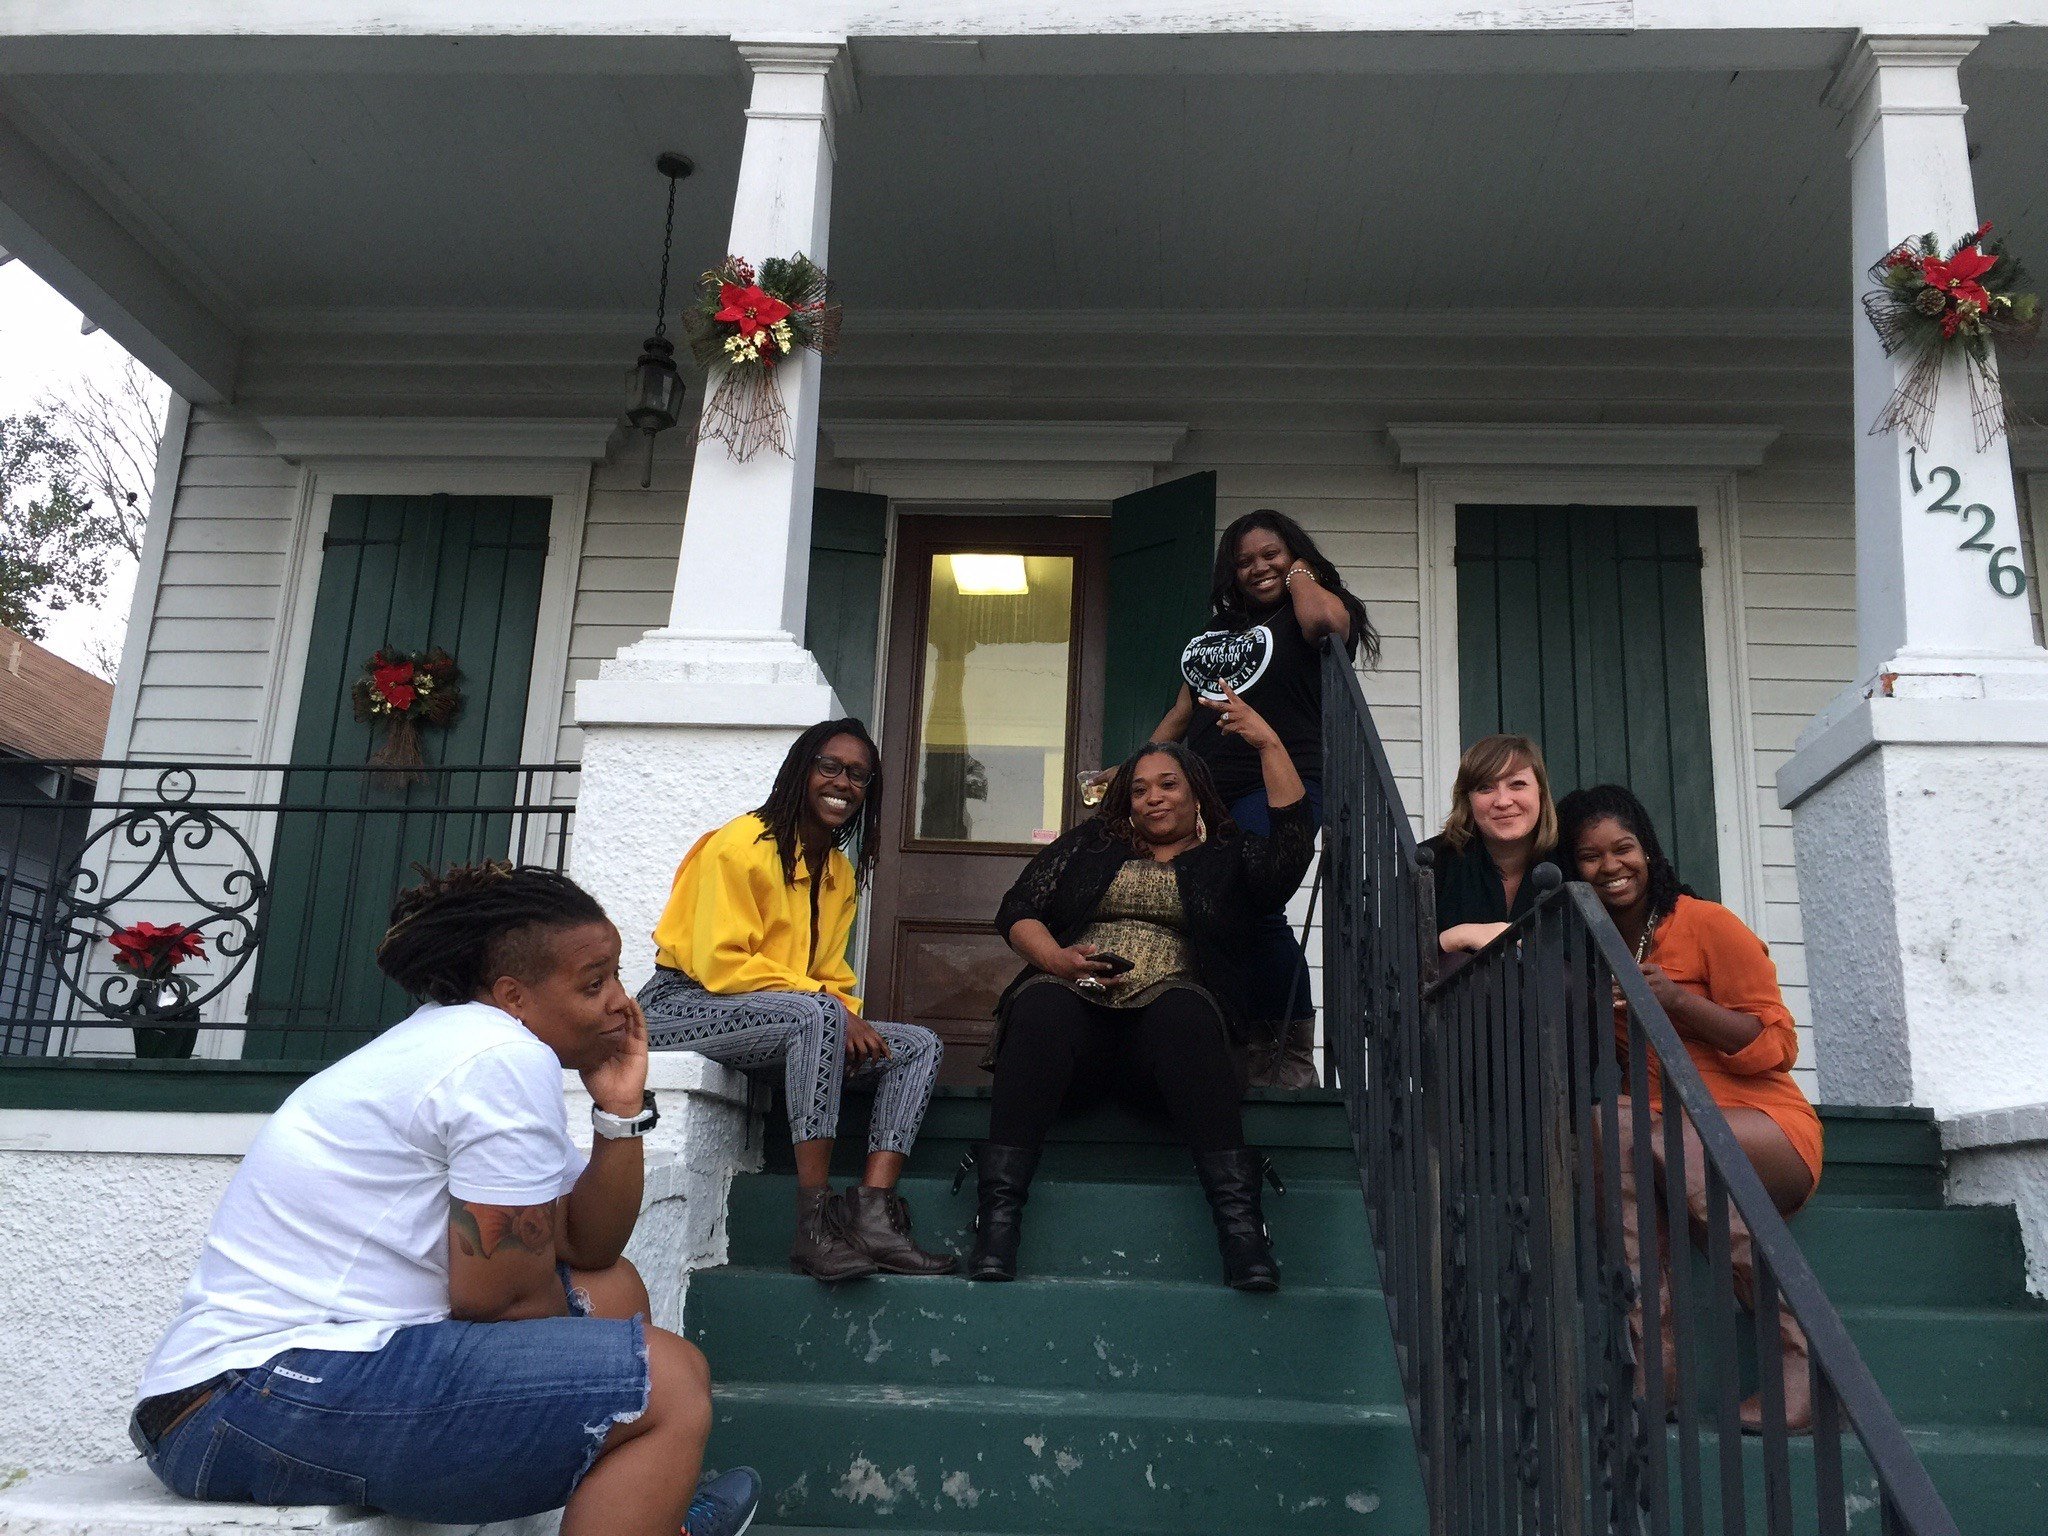  Shaquita Borden, Mwende Katwiwa, Deon Haywood, Nakita Shavers, Laura McTighe, and Nia Weeks sitting on WWAV’s front porch at 1226 N. Broad Street in New Orleans, Louisiana, December 16, 2015. 